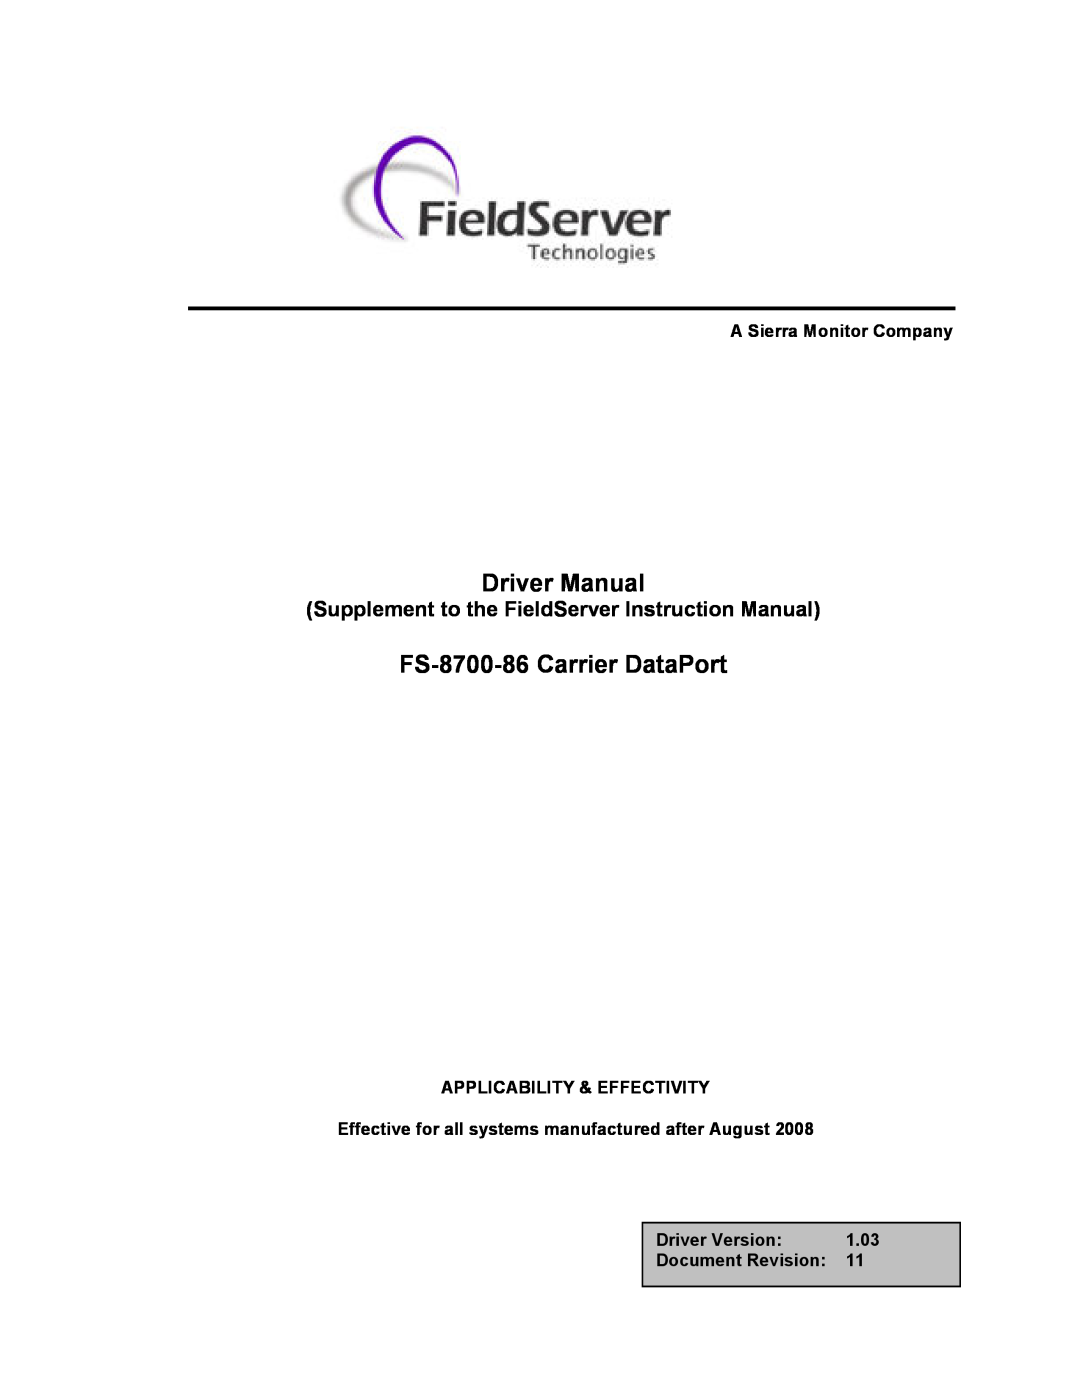 FieldServer instruction manual Driver Manual, FS-8700-86 Carrier DataPort 